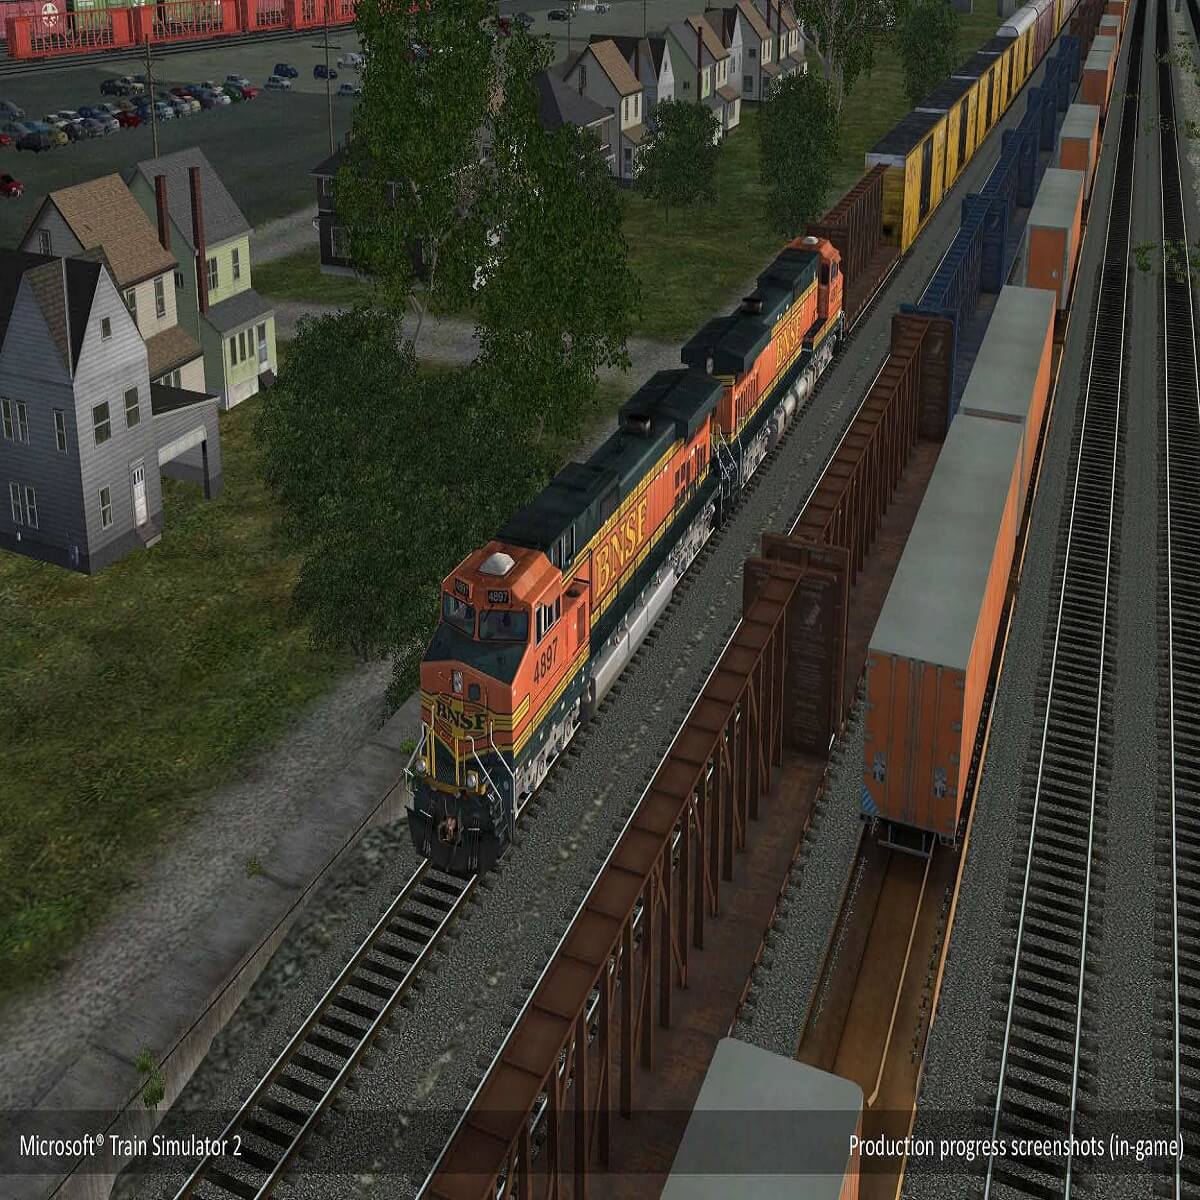 Microsoft Train Simulator On Windows 10 How To Install And Run